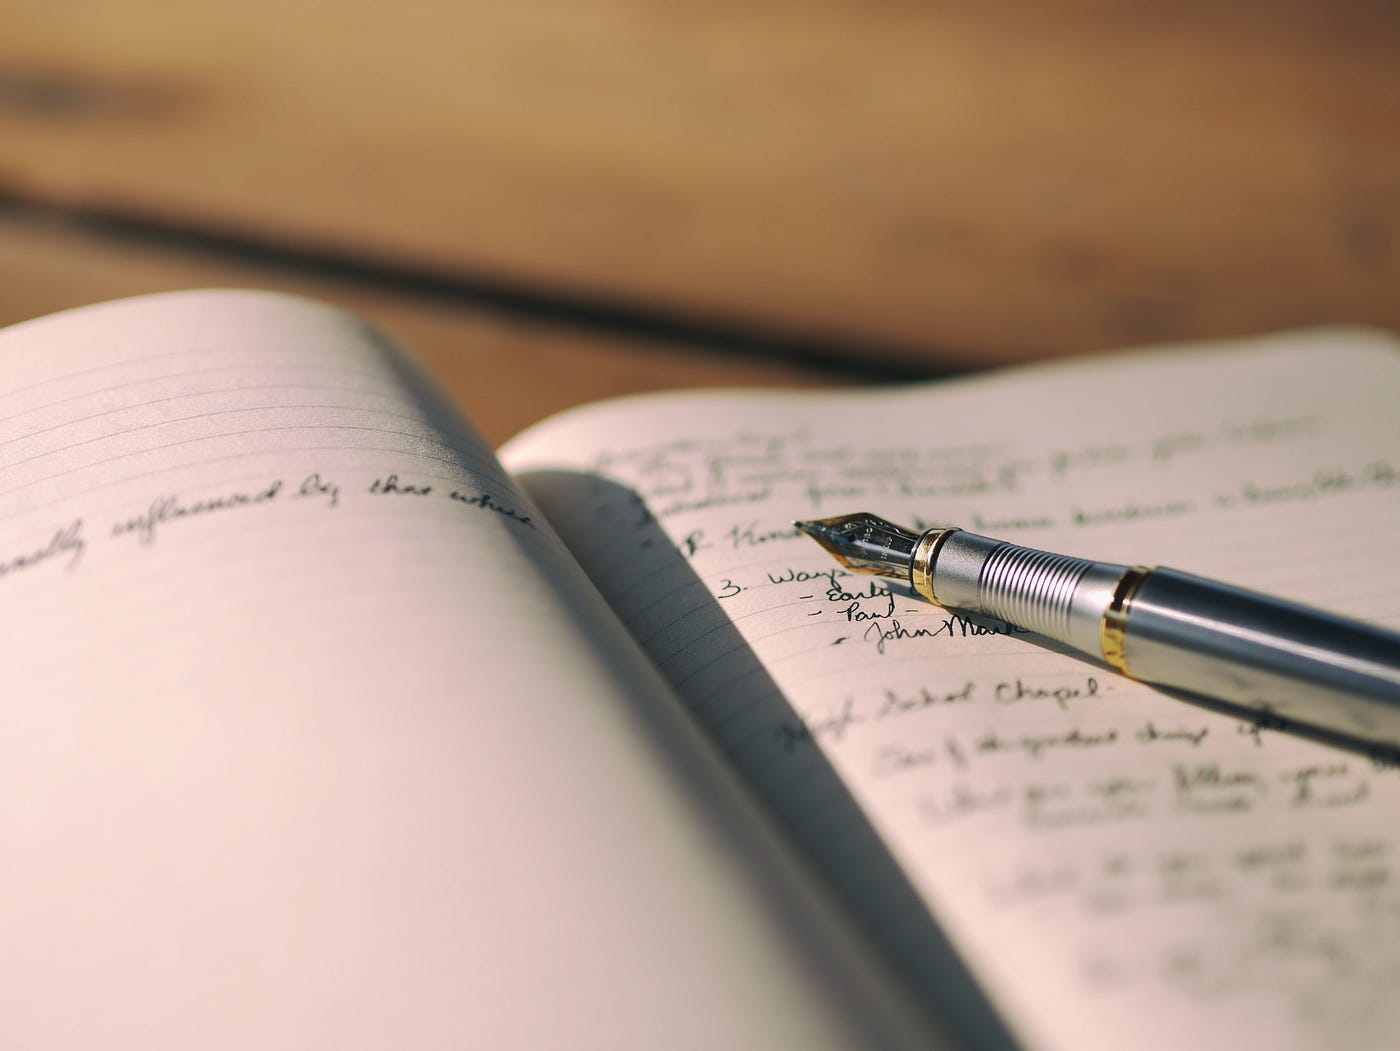 3 reasons to start writing a journal